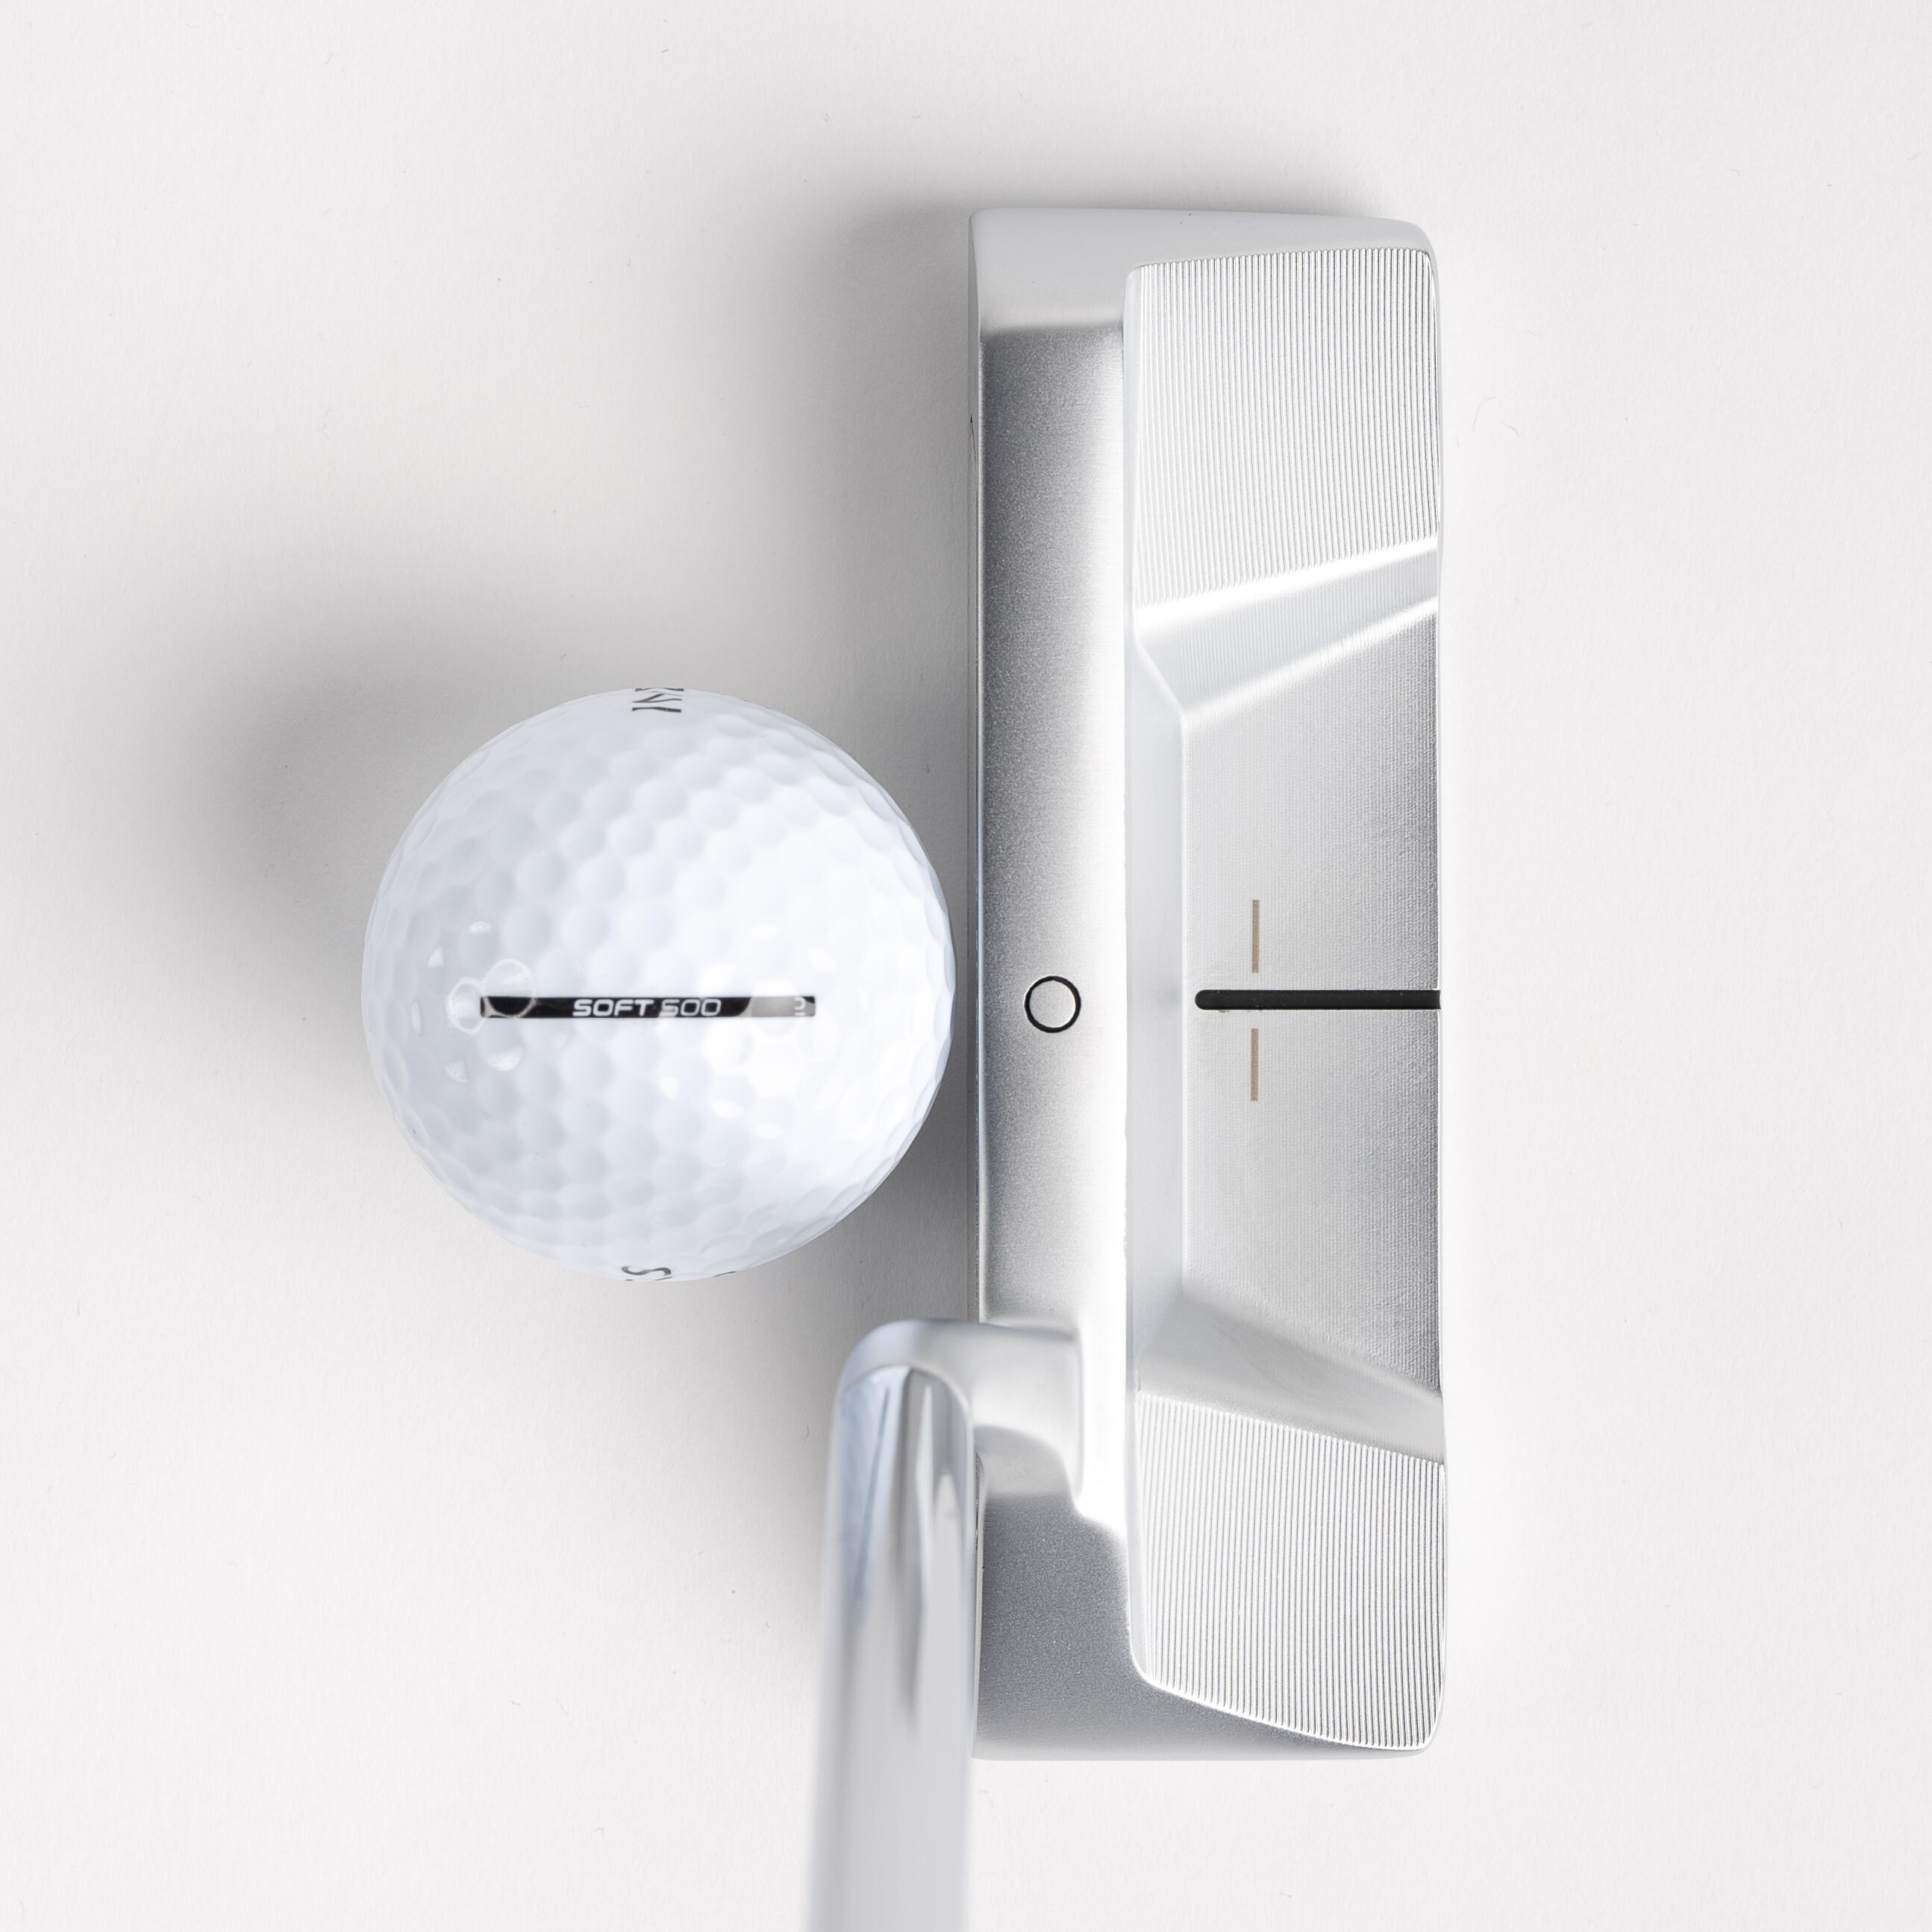 Balles de golf douces x12 – Soft 500 orange - INESIS